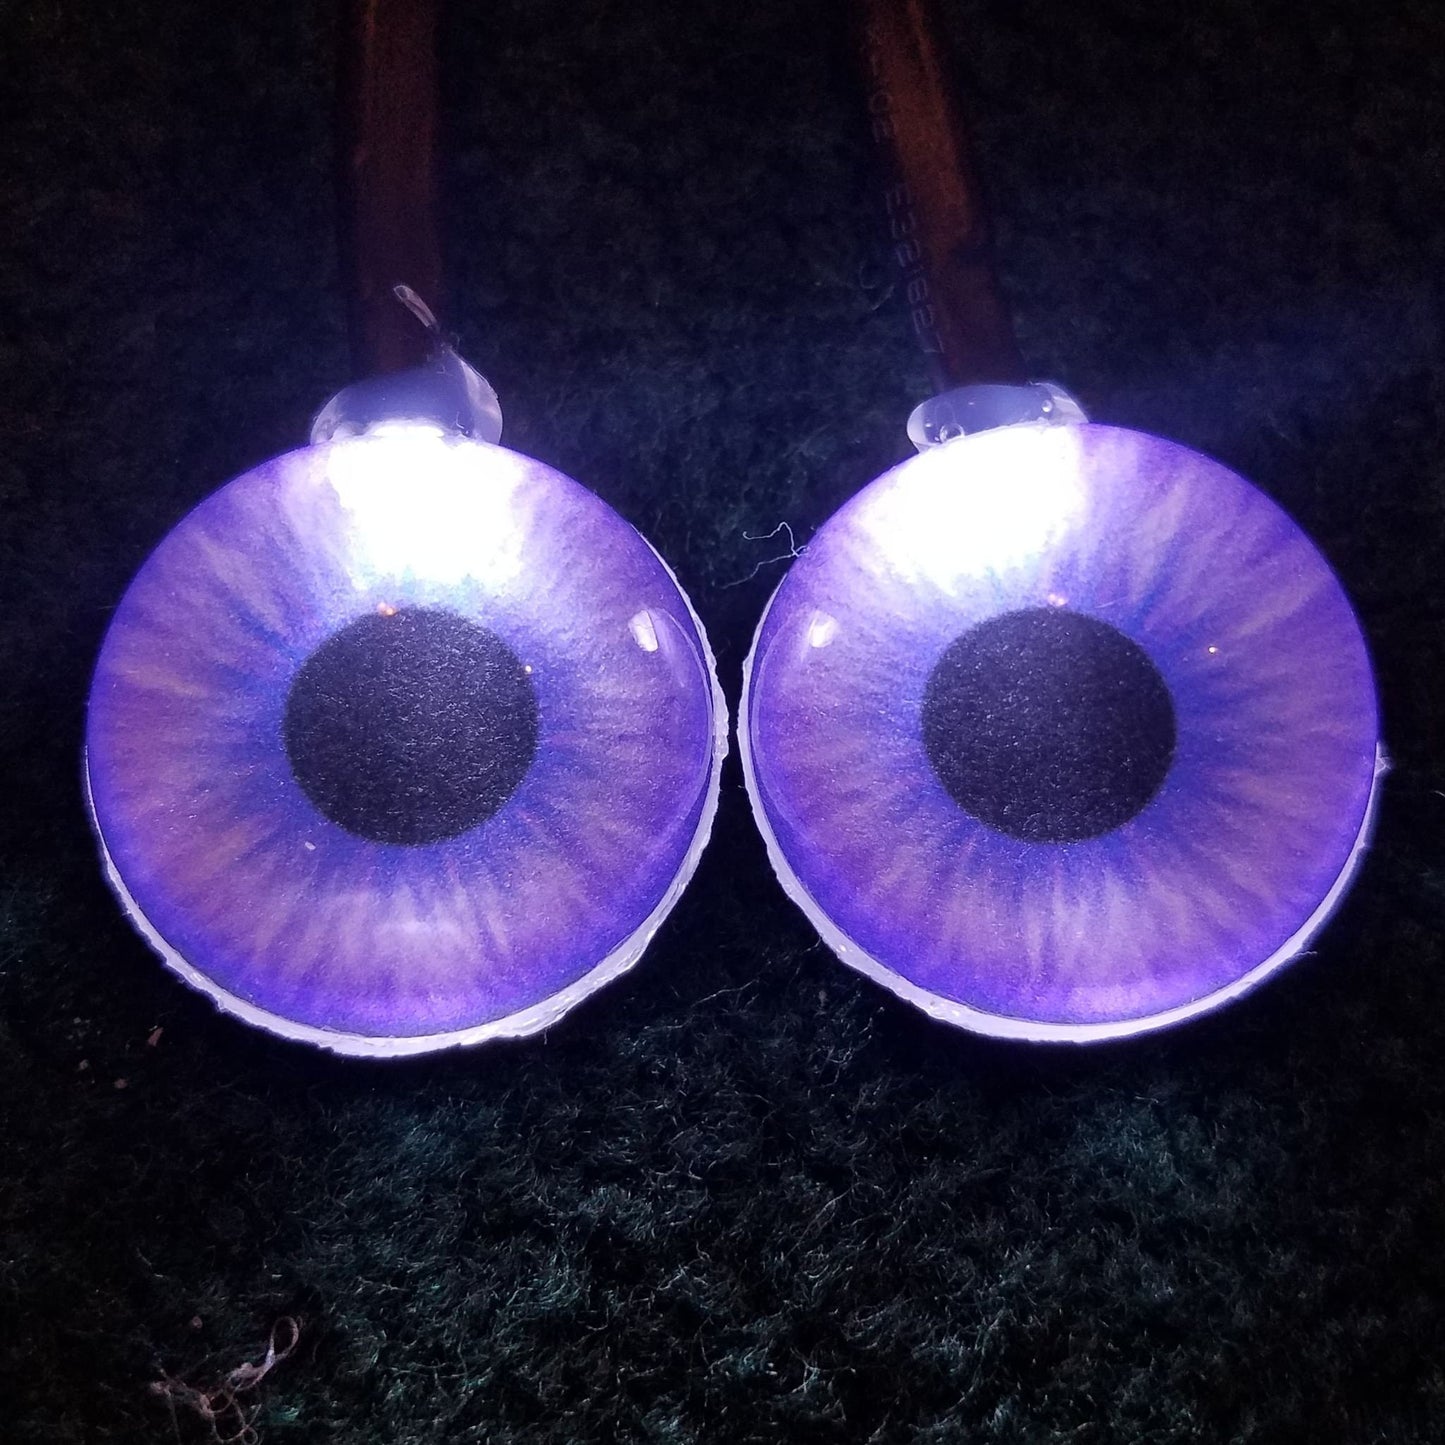 LED Costume / Fursuit Eyes (Power Options!) - Custom - 1.5" - 2" - Acrylic 3-D Follow Me Eyes